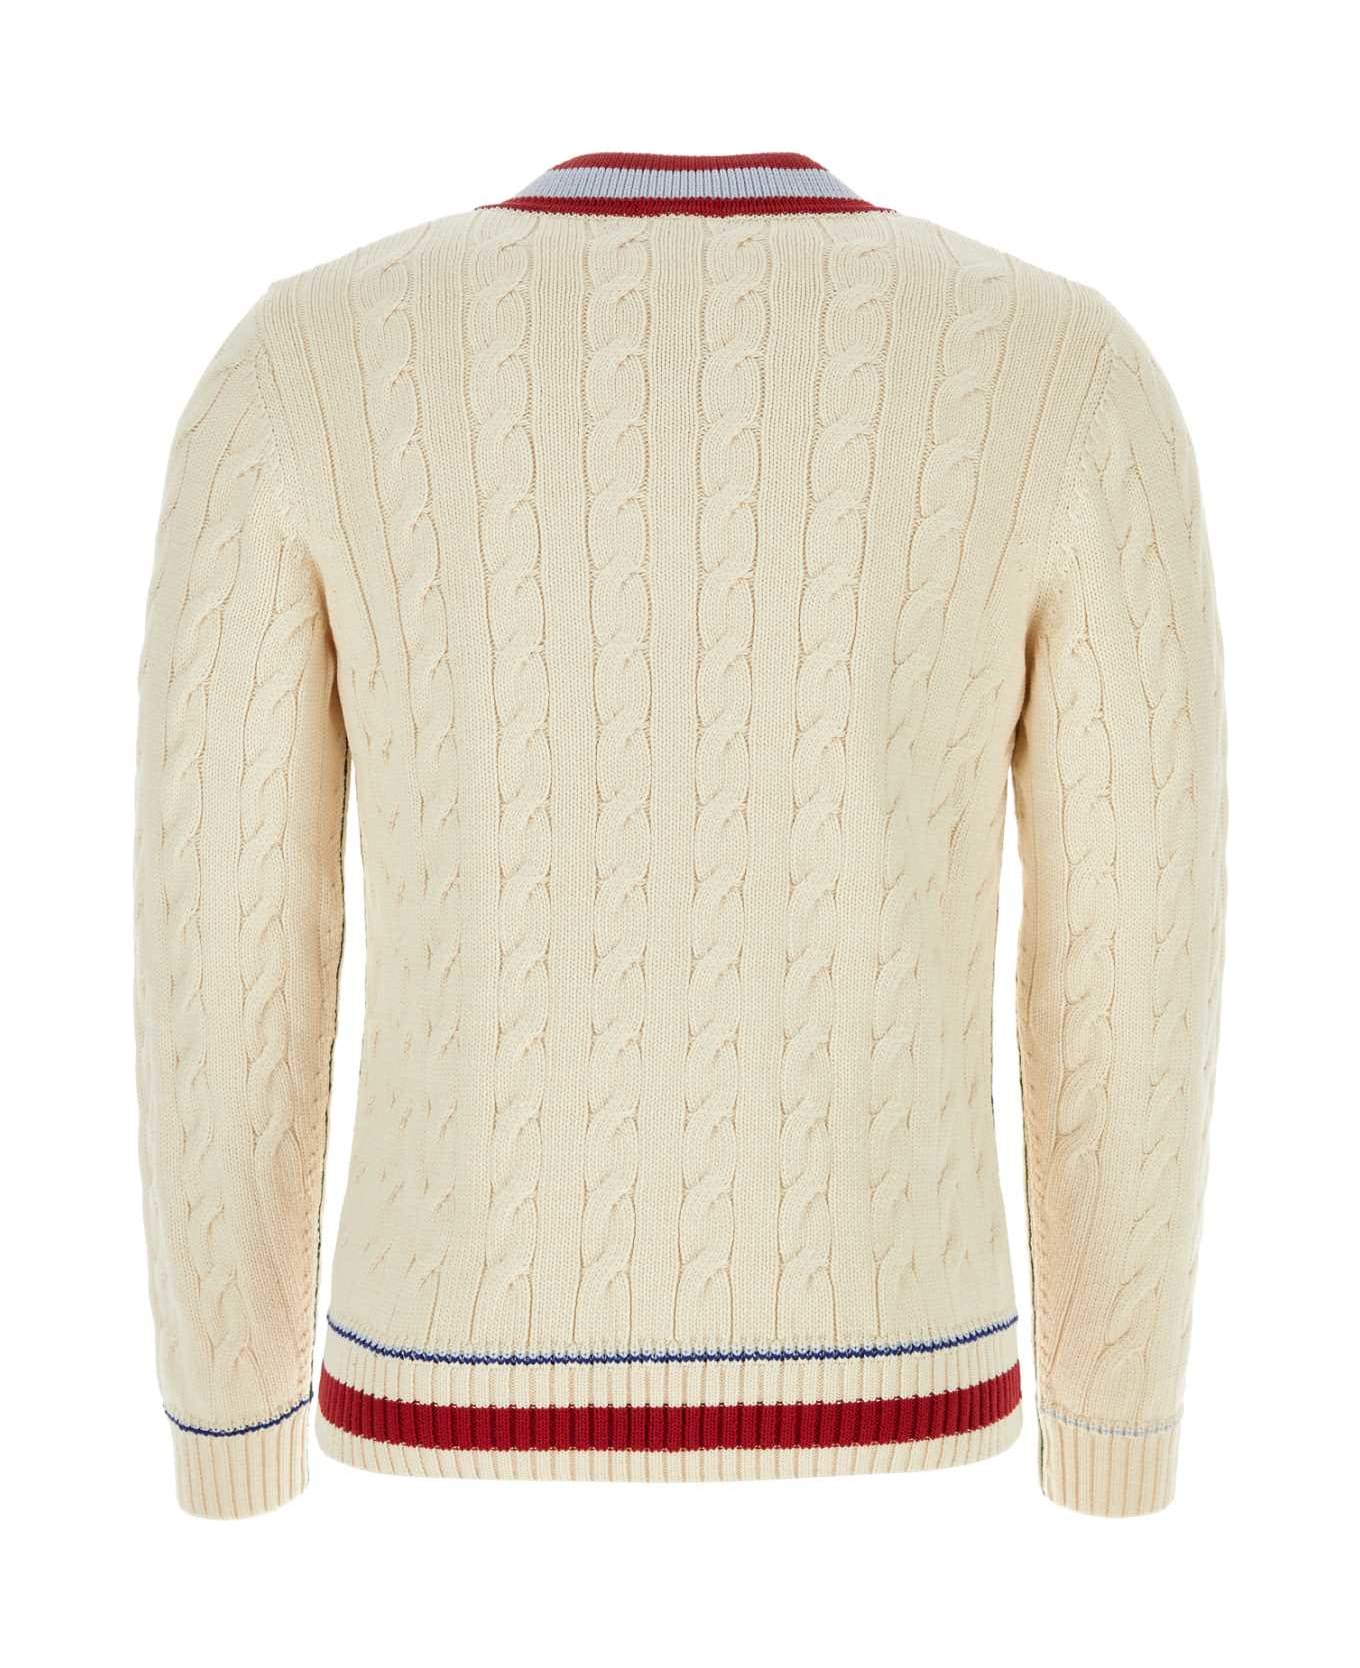 Lacoste Sand Cotton Blend Sweater - IQ1